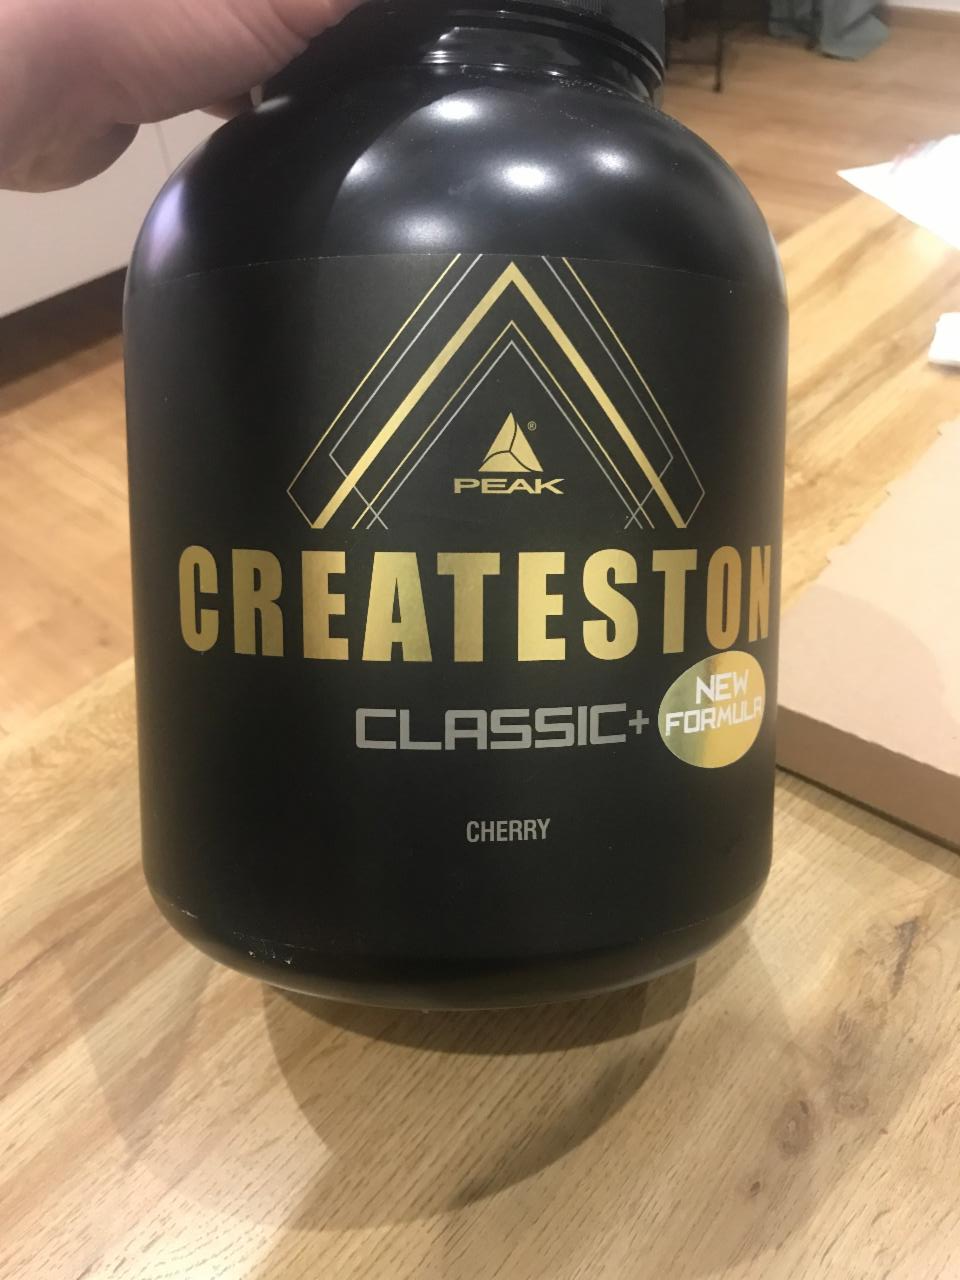 Fotografie - Peak Createston Classic + New Formula Cherry